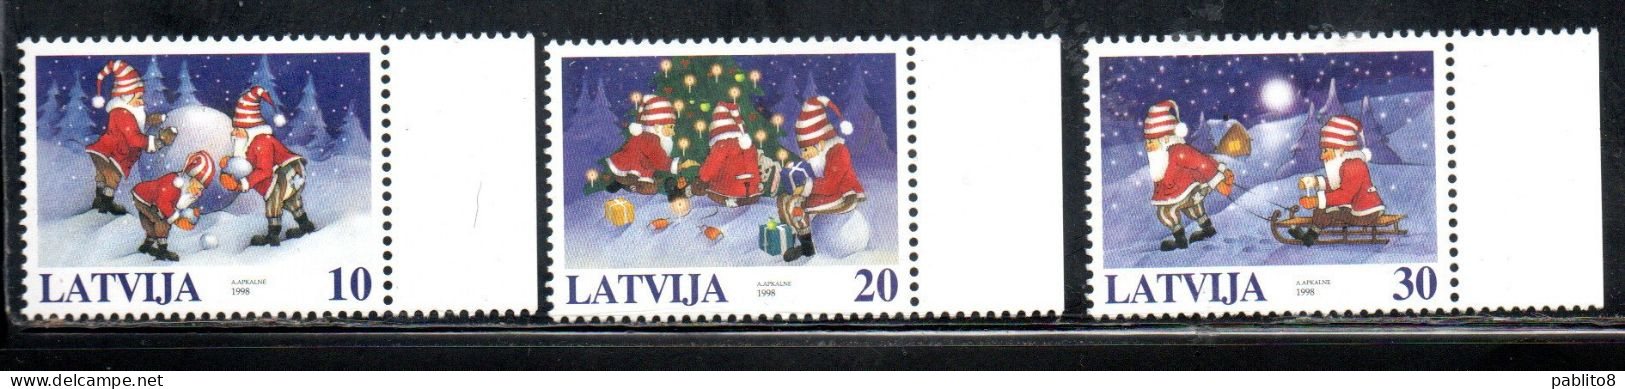 LATVIA LETTLAND LETTONIA LATVIJA 1998 CHRISTMAS NATALE NOEL WEIHNACHTEN NAVIDAD COMPLETE SET SERIE COMPLETA MNH - Lettonie